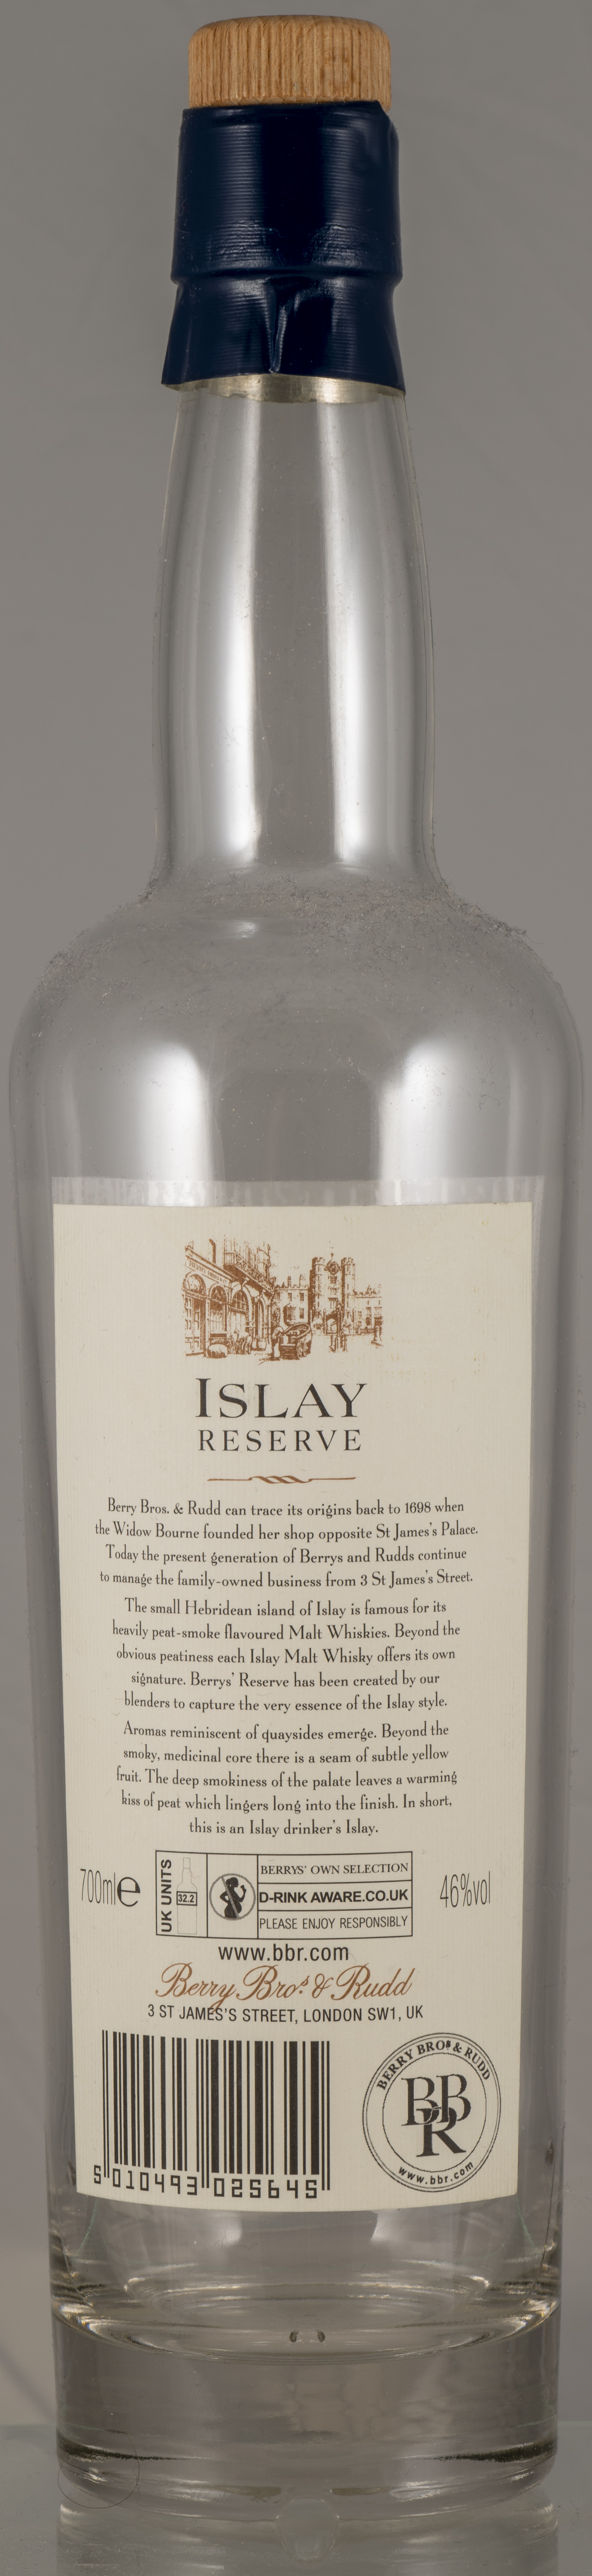 Billede: PHC_7136 - Berrys - Islay Reserve - bottle back.jpg